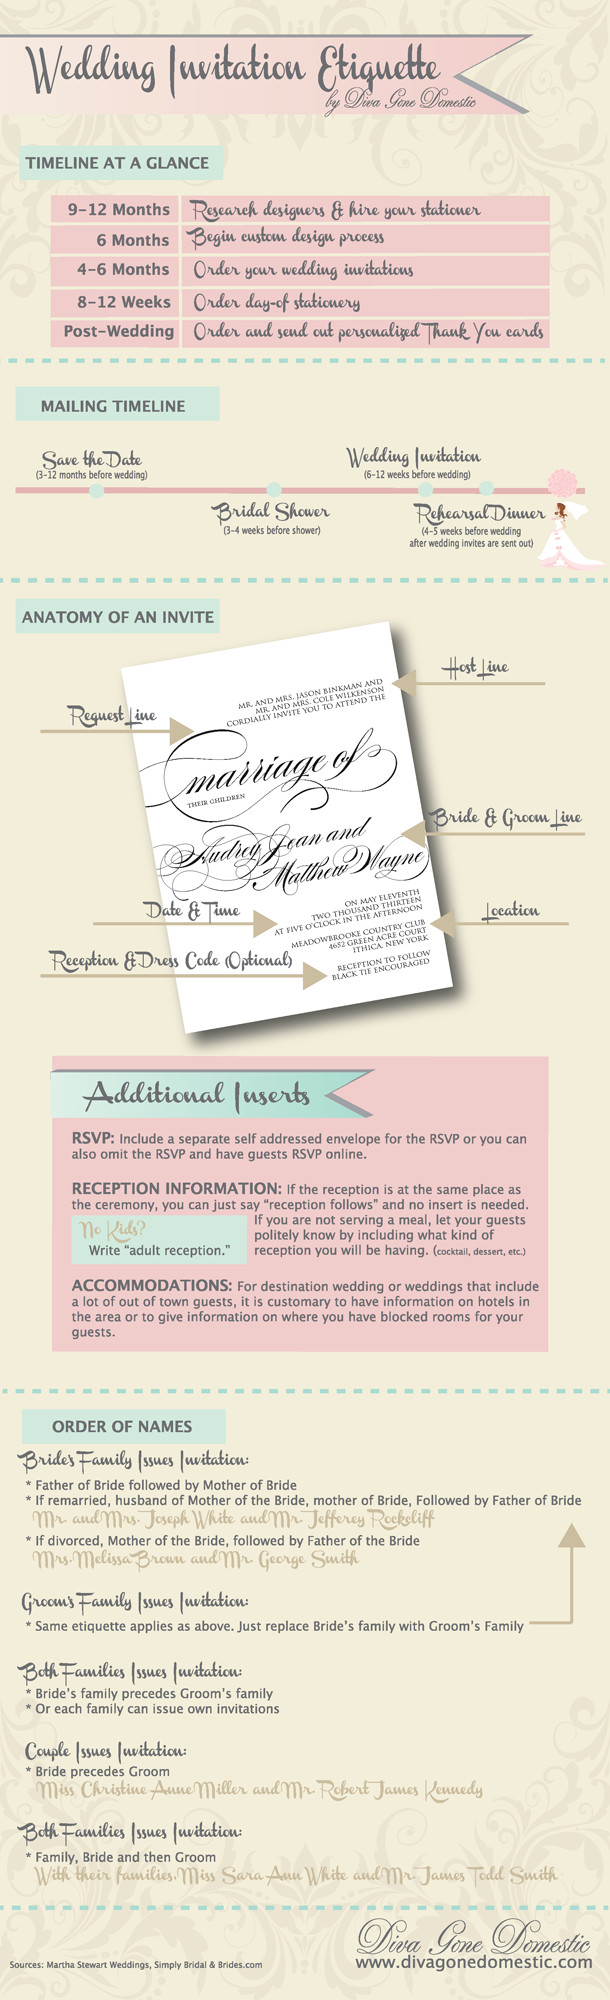 Wedding Invitation Wording Etiquette
 25 Informal Wedding Invitation Wording Ideas